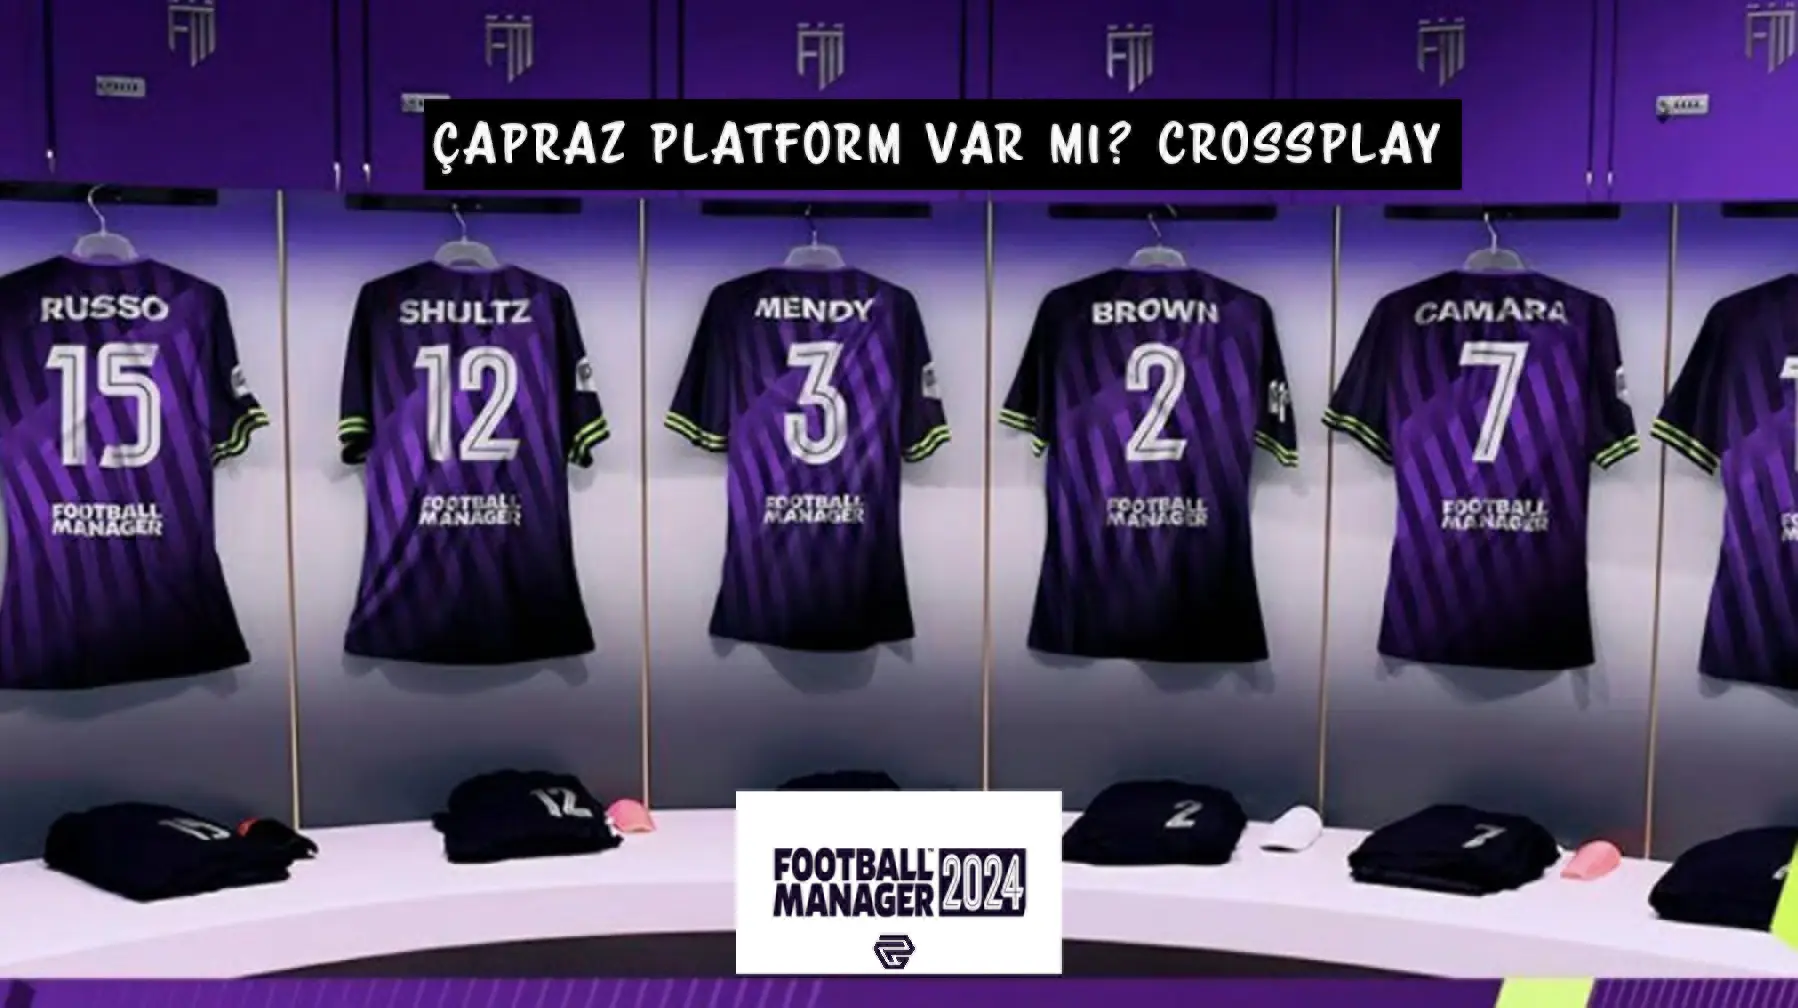 FM 24 Çapraz Platform Var Mı? Football Manager 2024 Crossplay